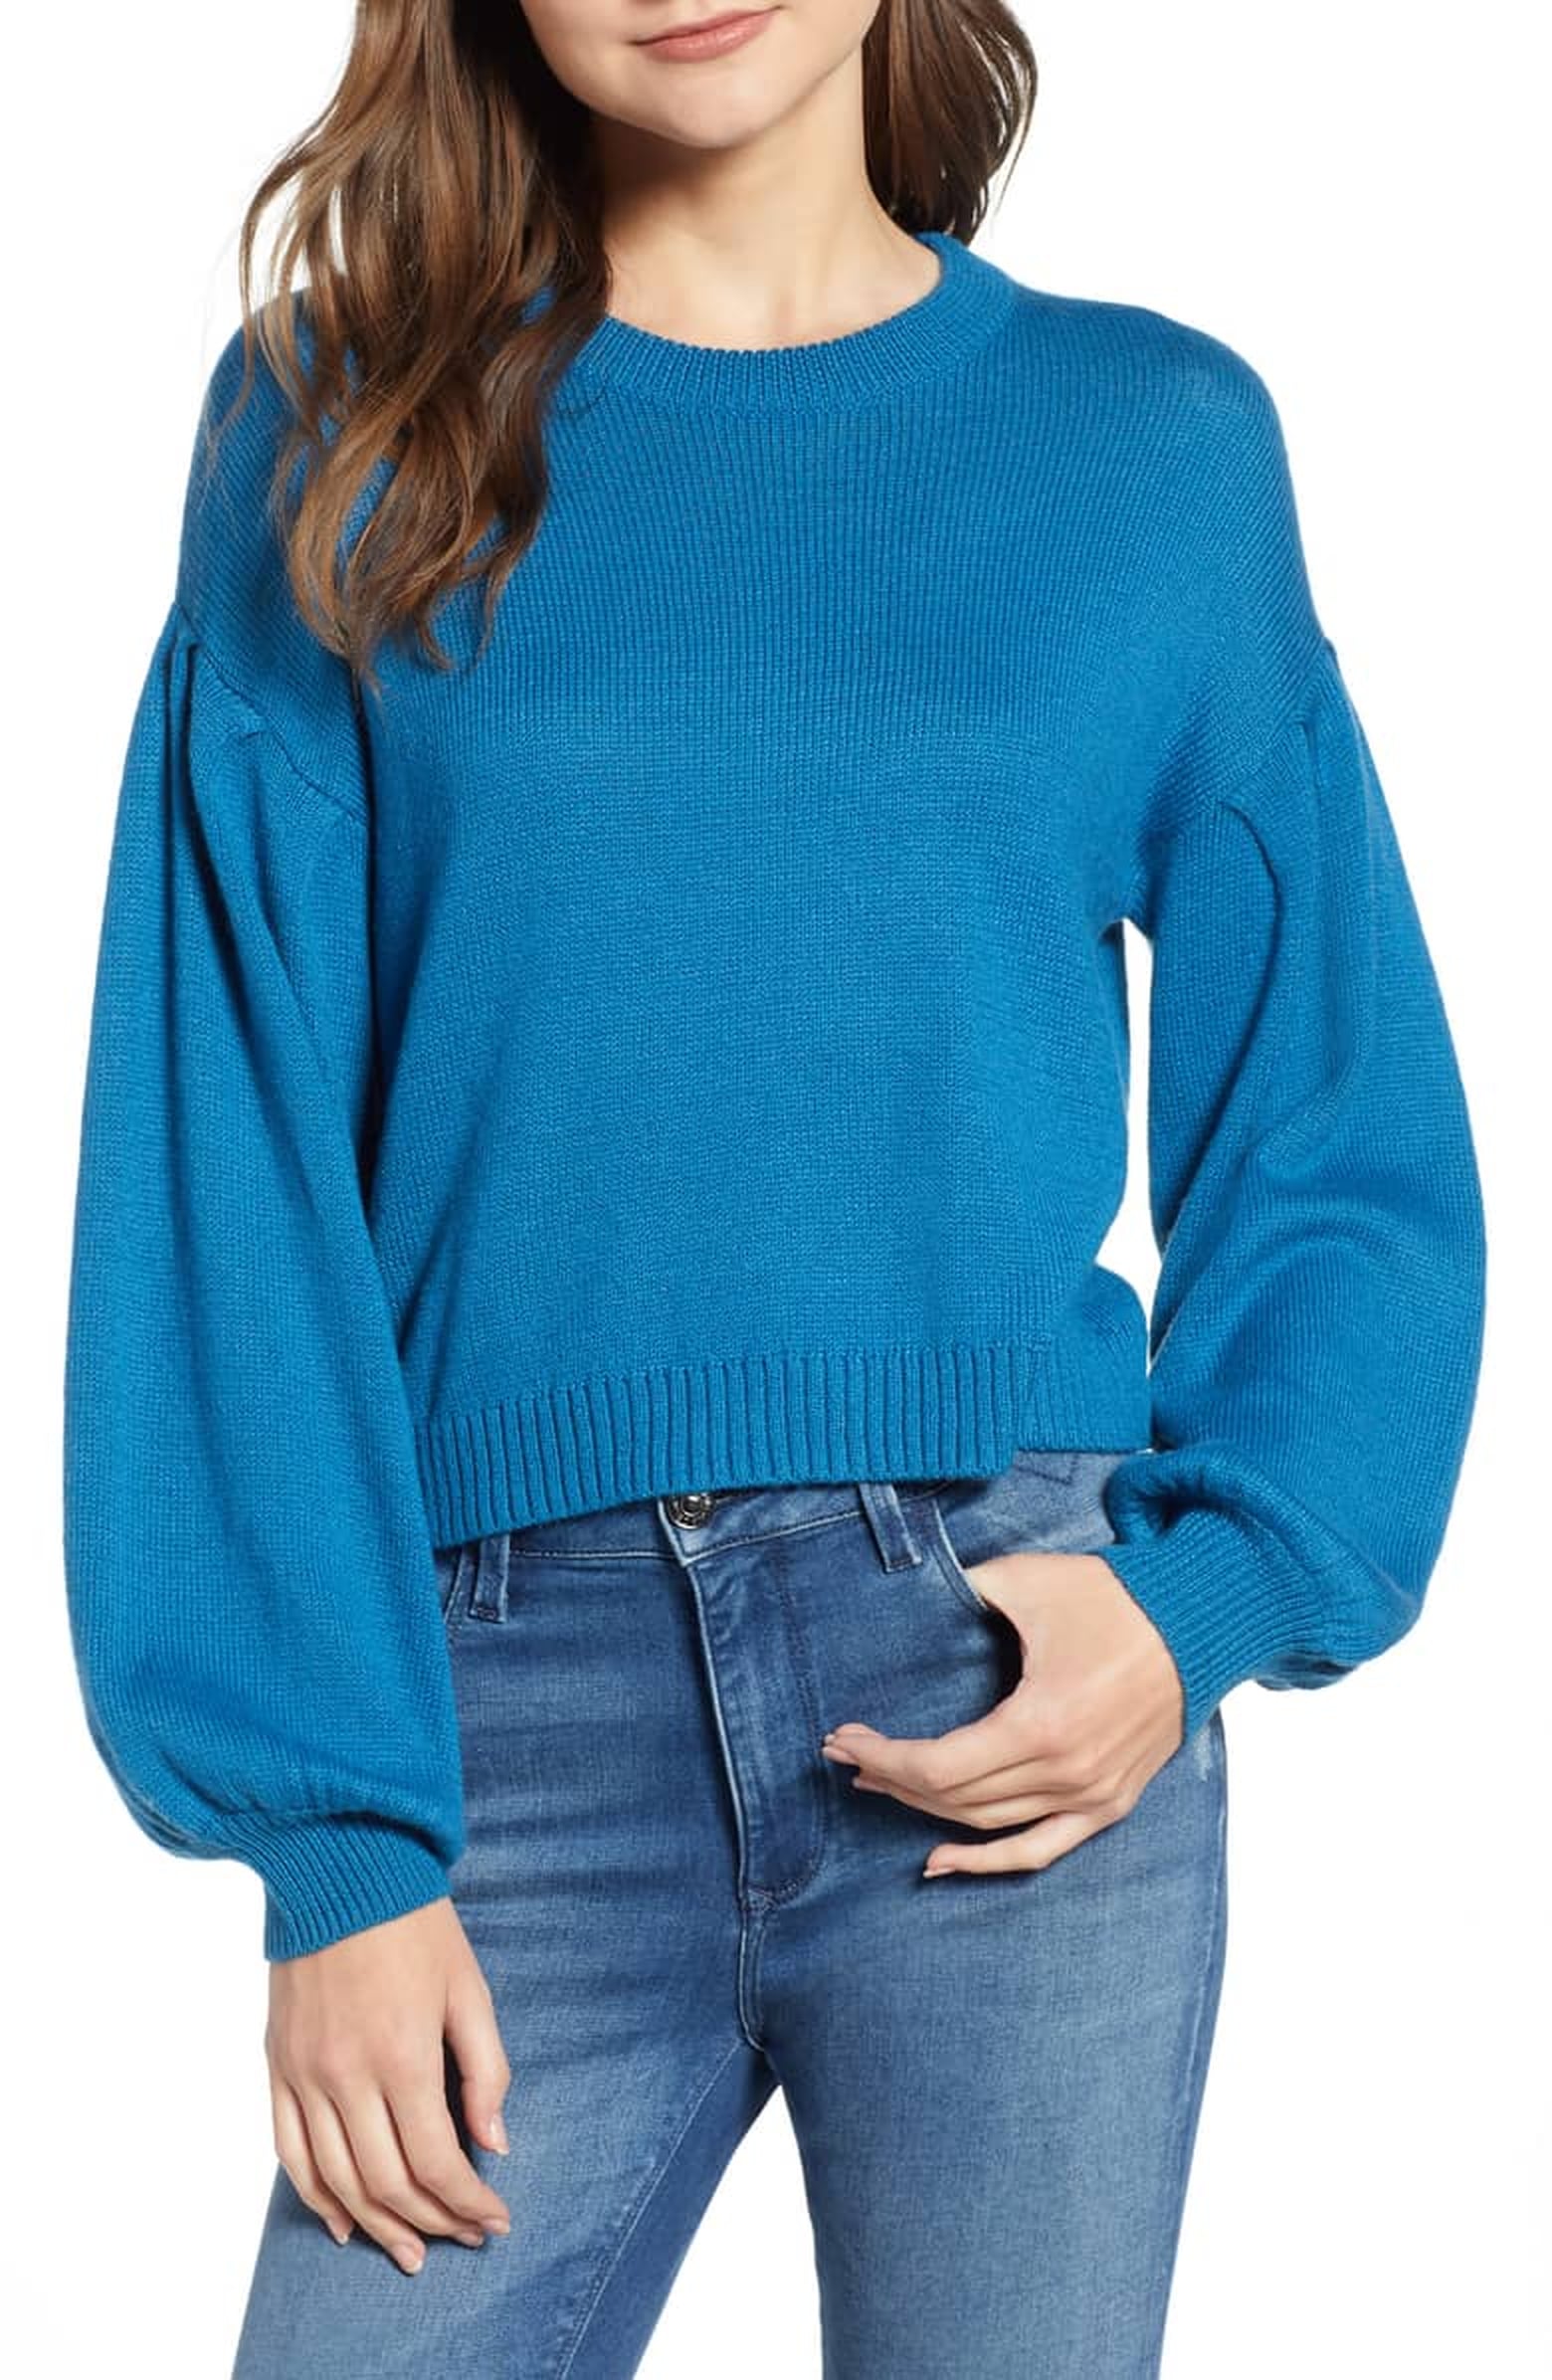 Cheap Sweaters 2018 | POPSUGAR Fashion